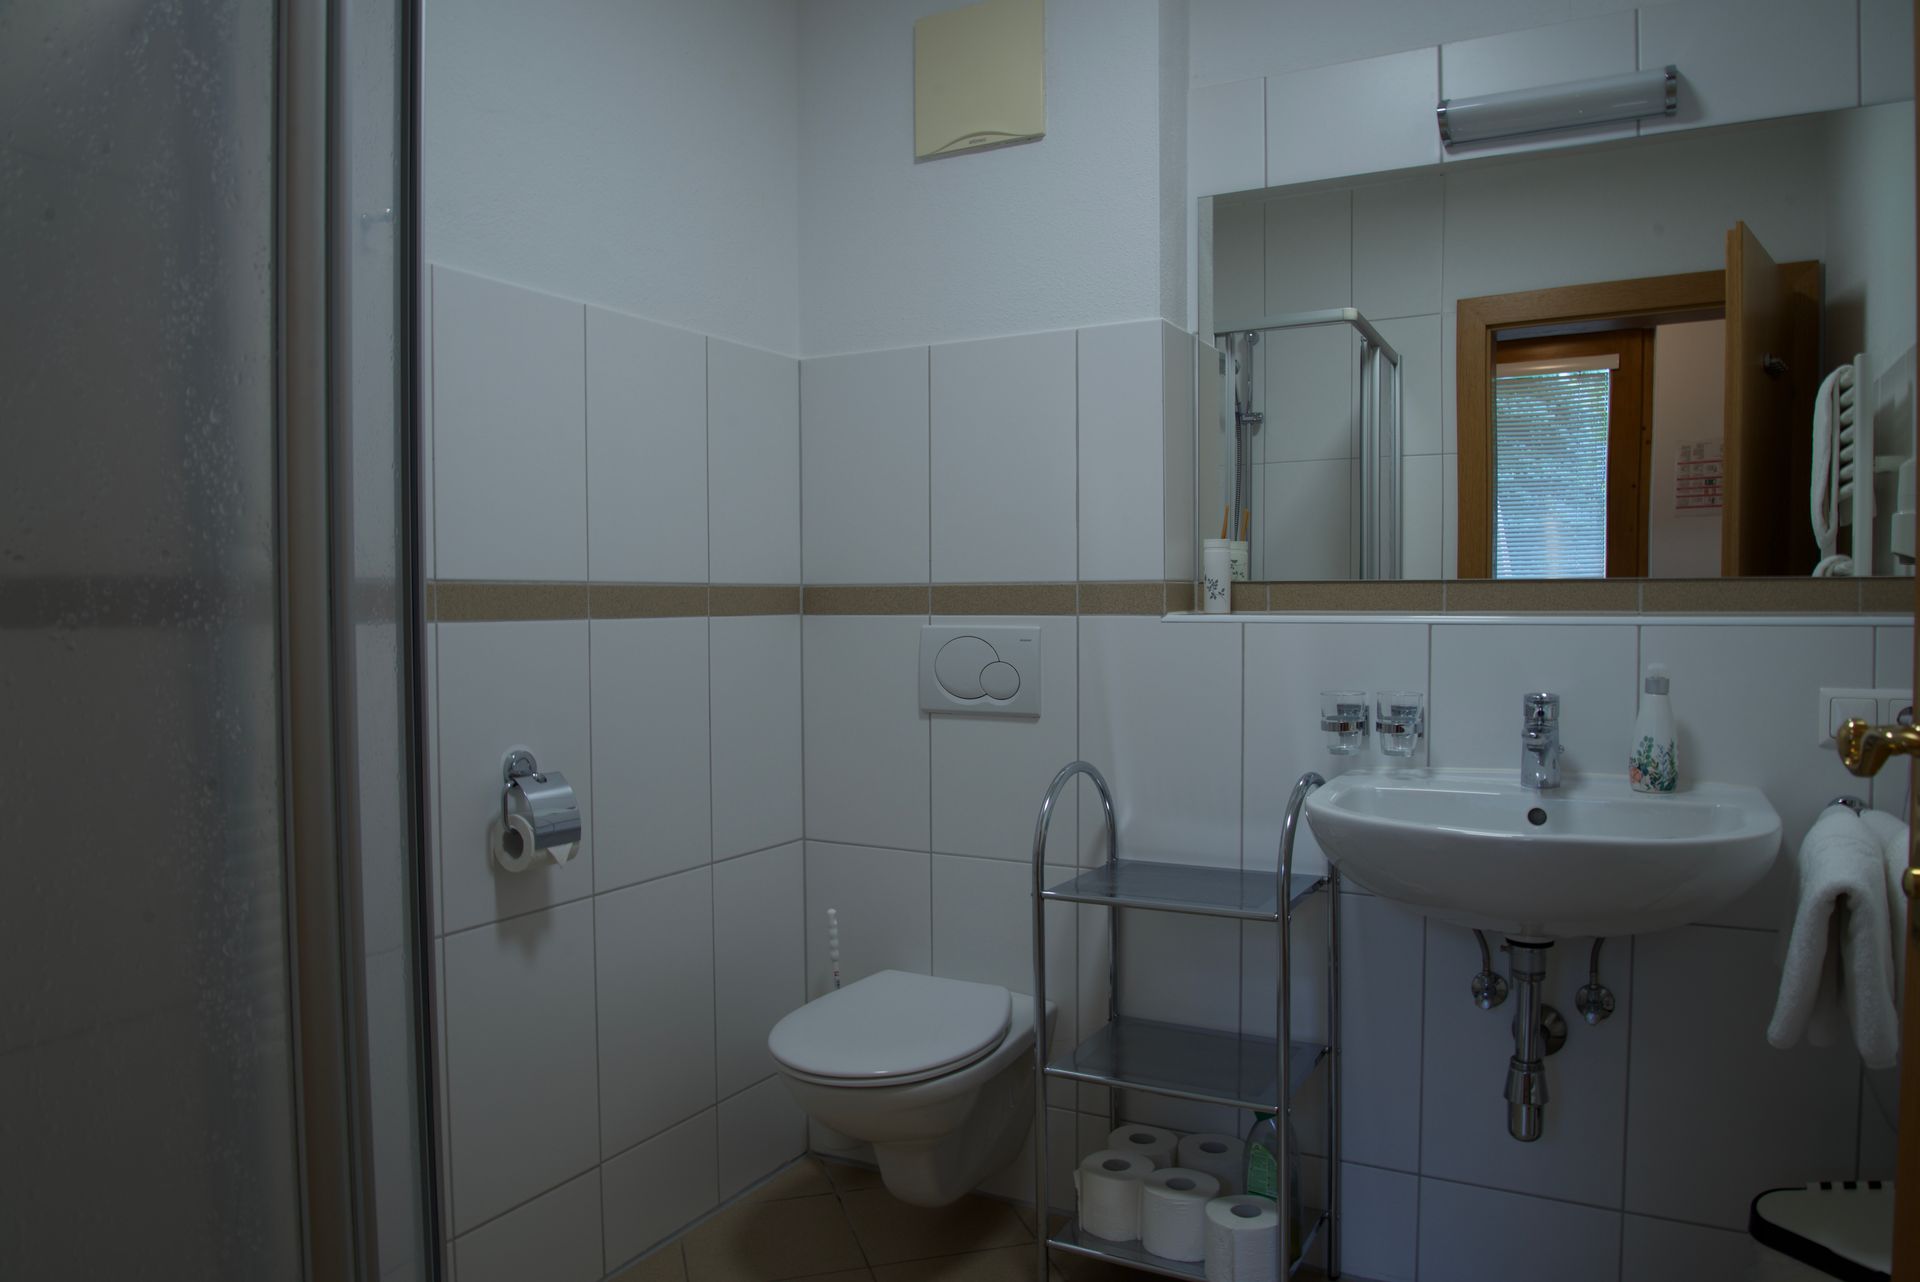 en suite bathroom with shower and toilet